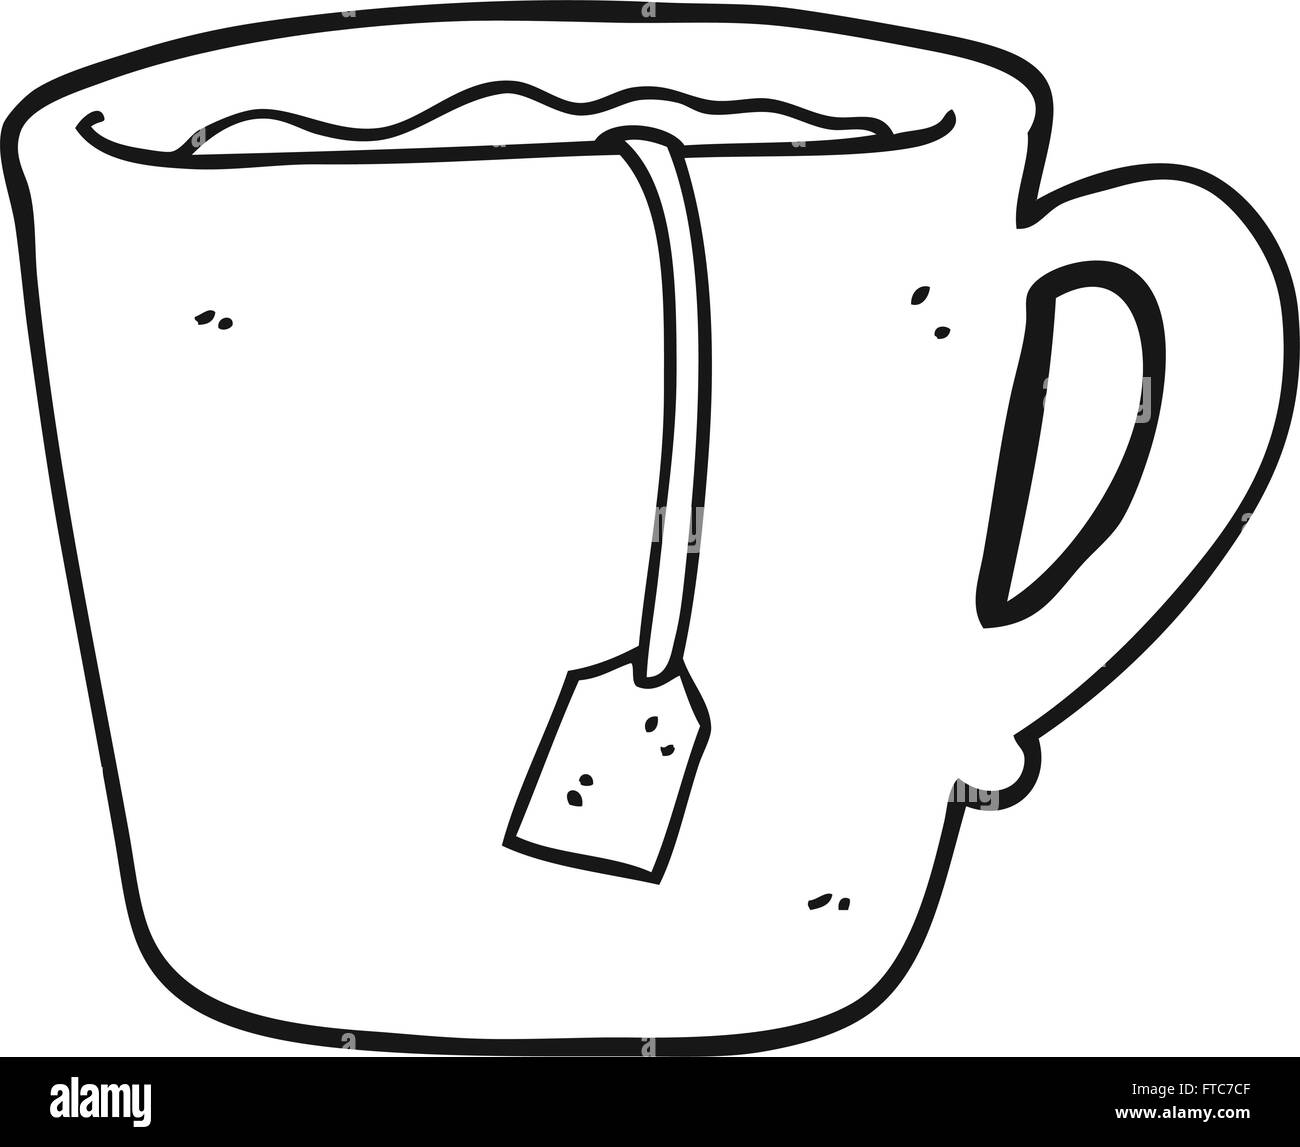 white tea cup cartoon